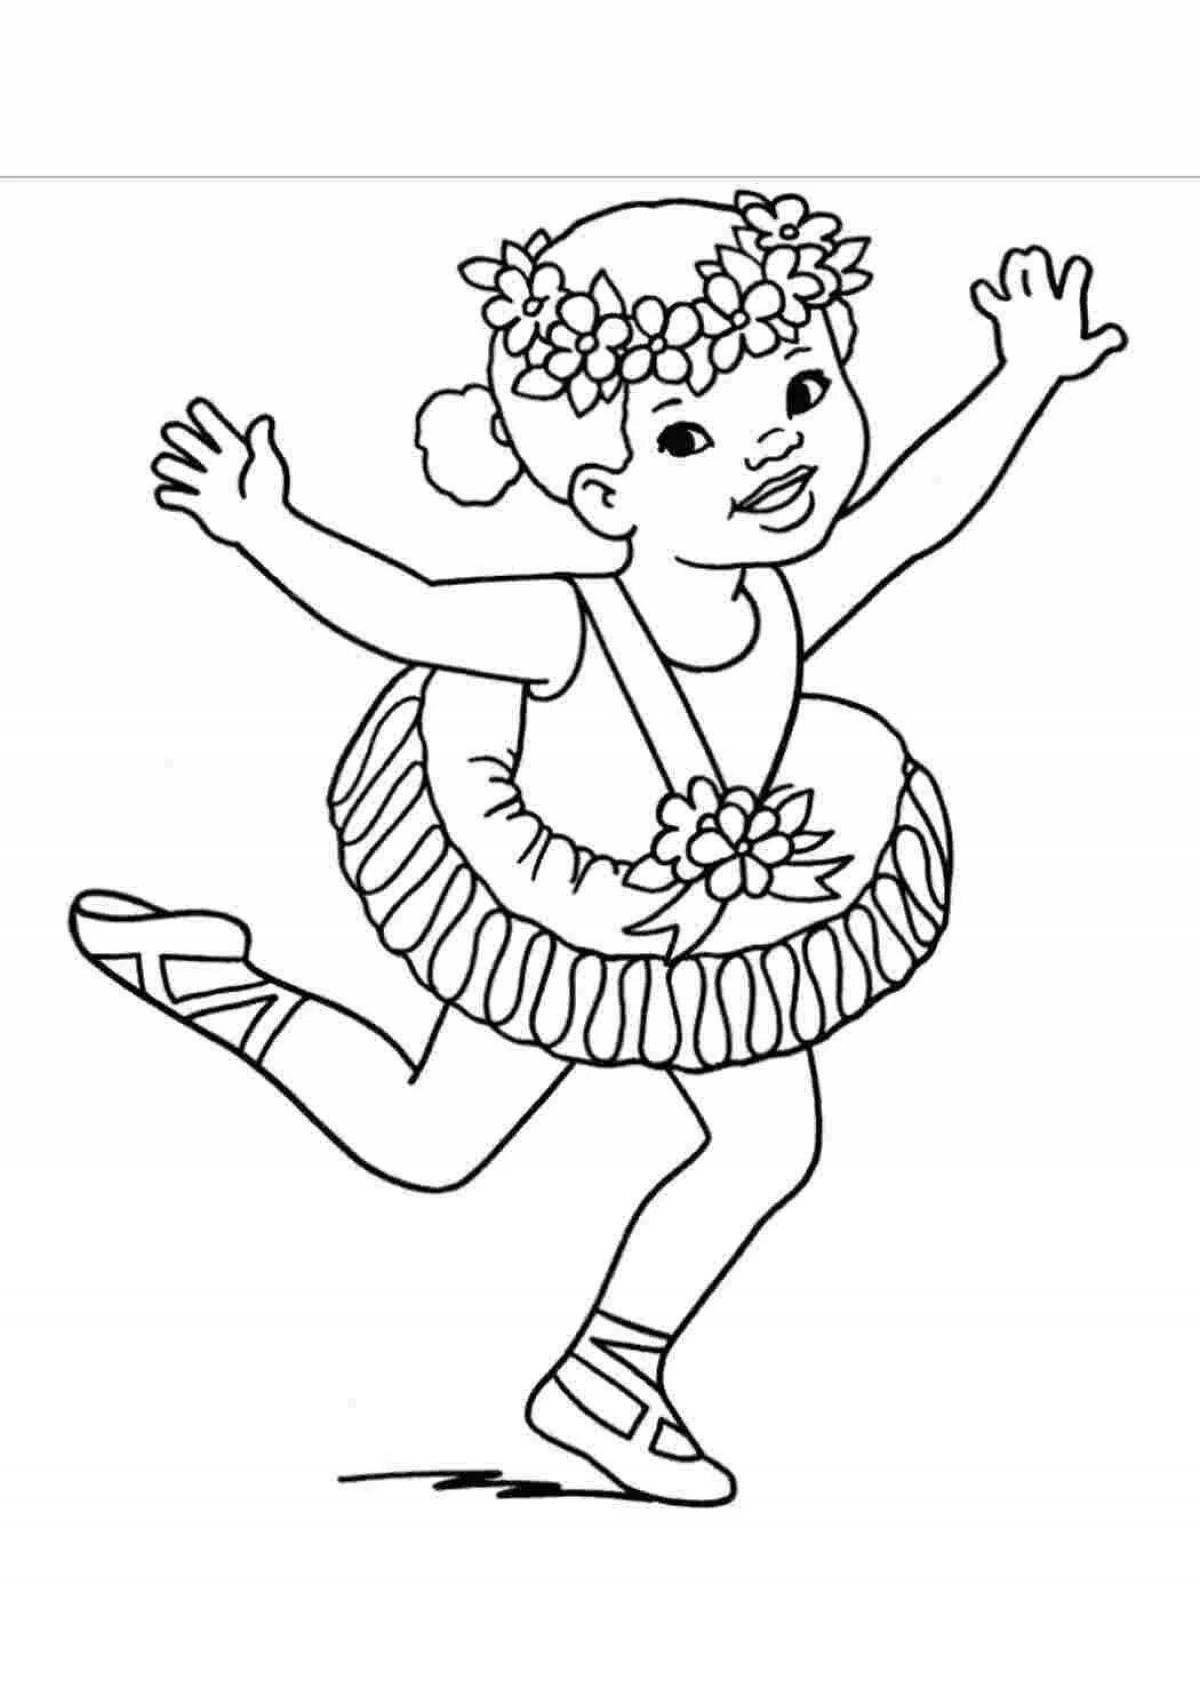 Coloring page energetic dancing girl